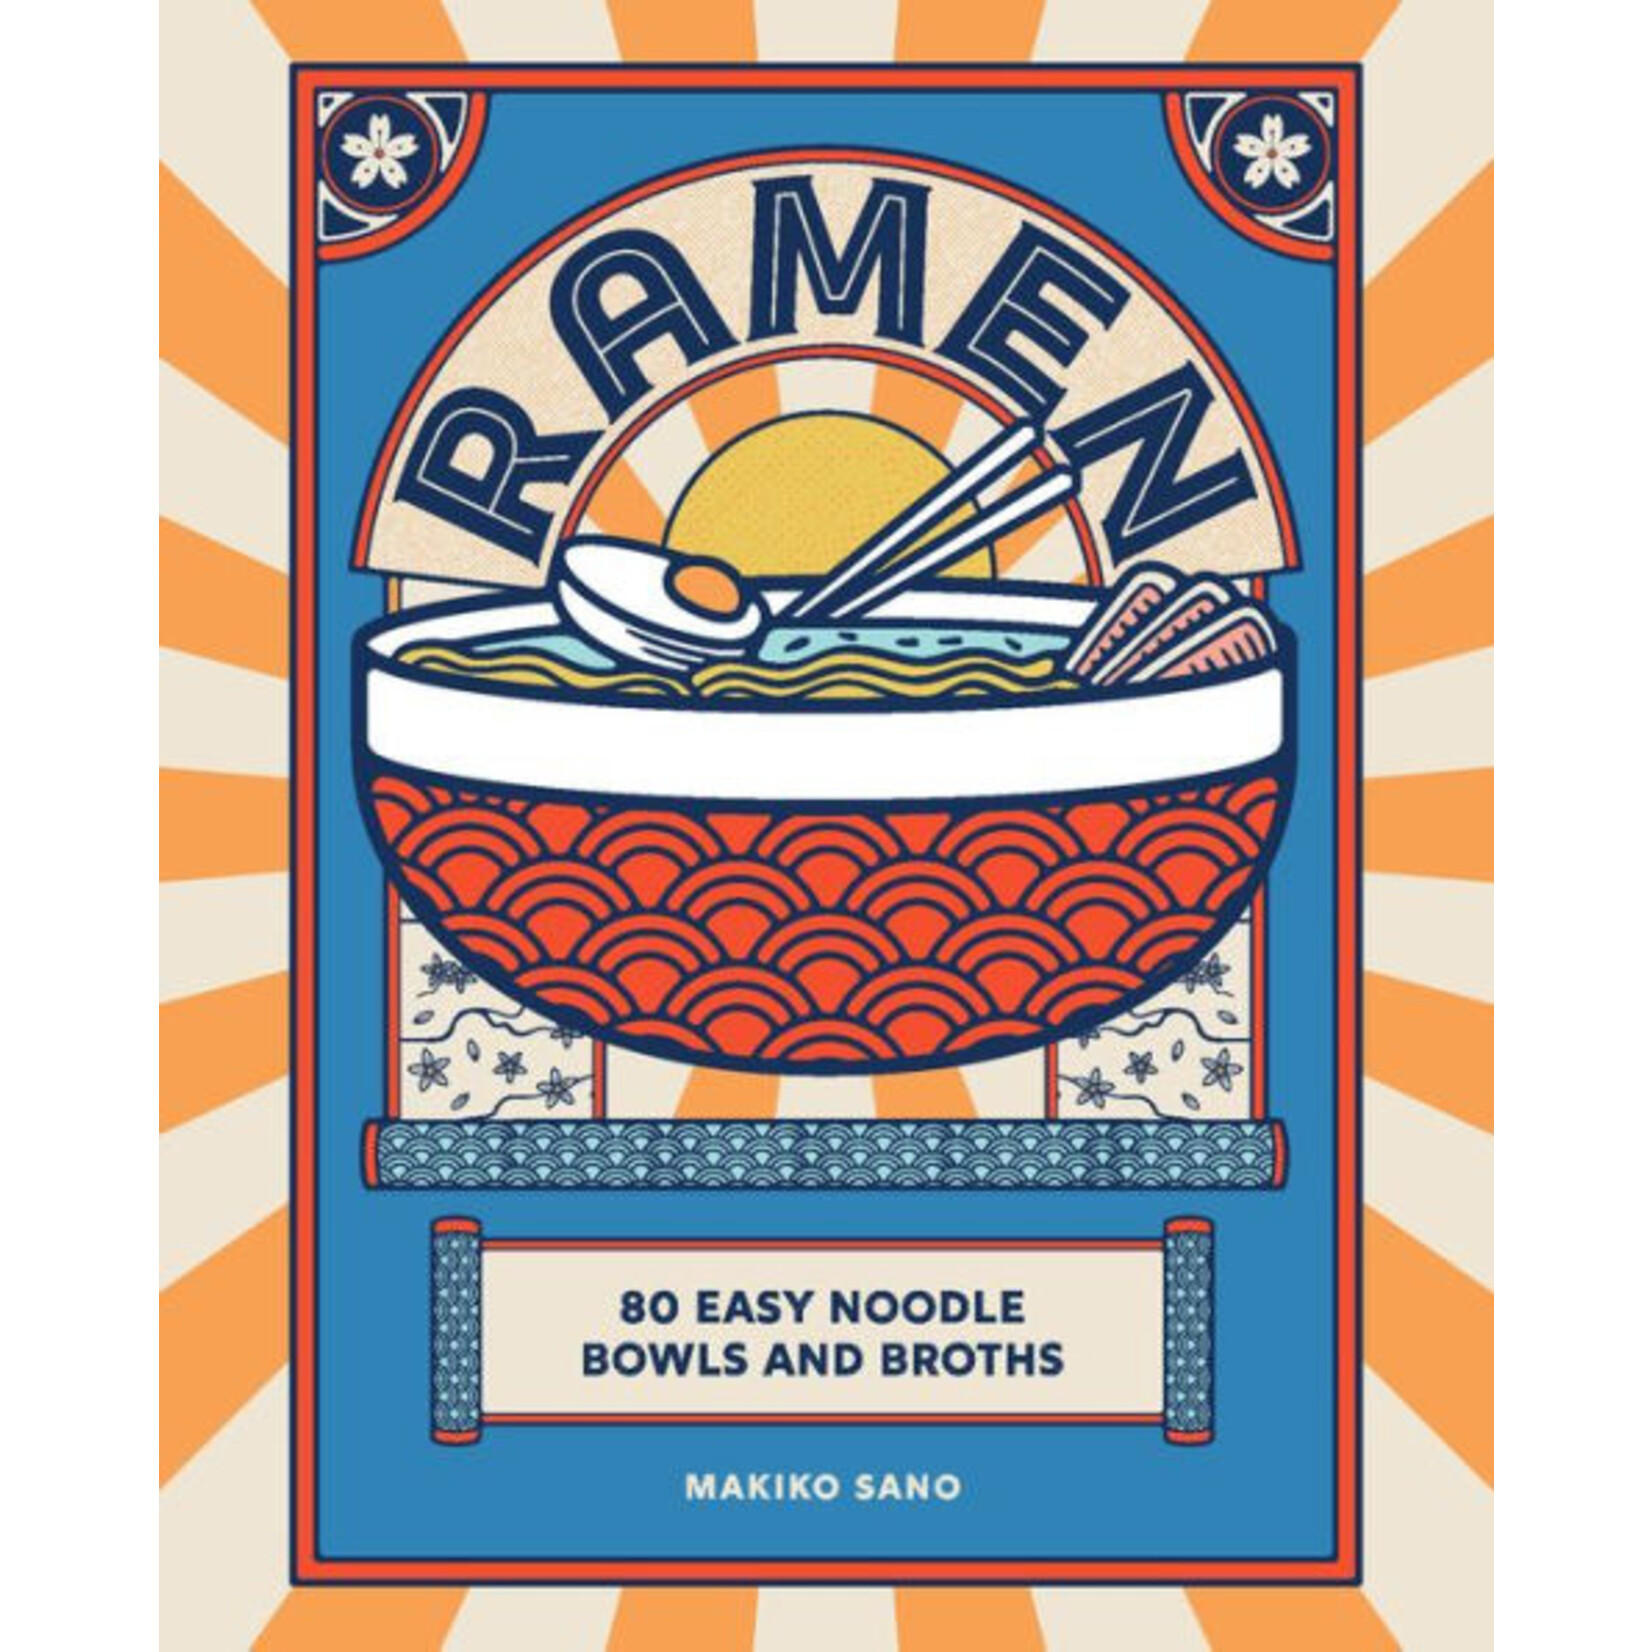 Hachette Book Group Ramen 80 East Noodle Bowls and Broths